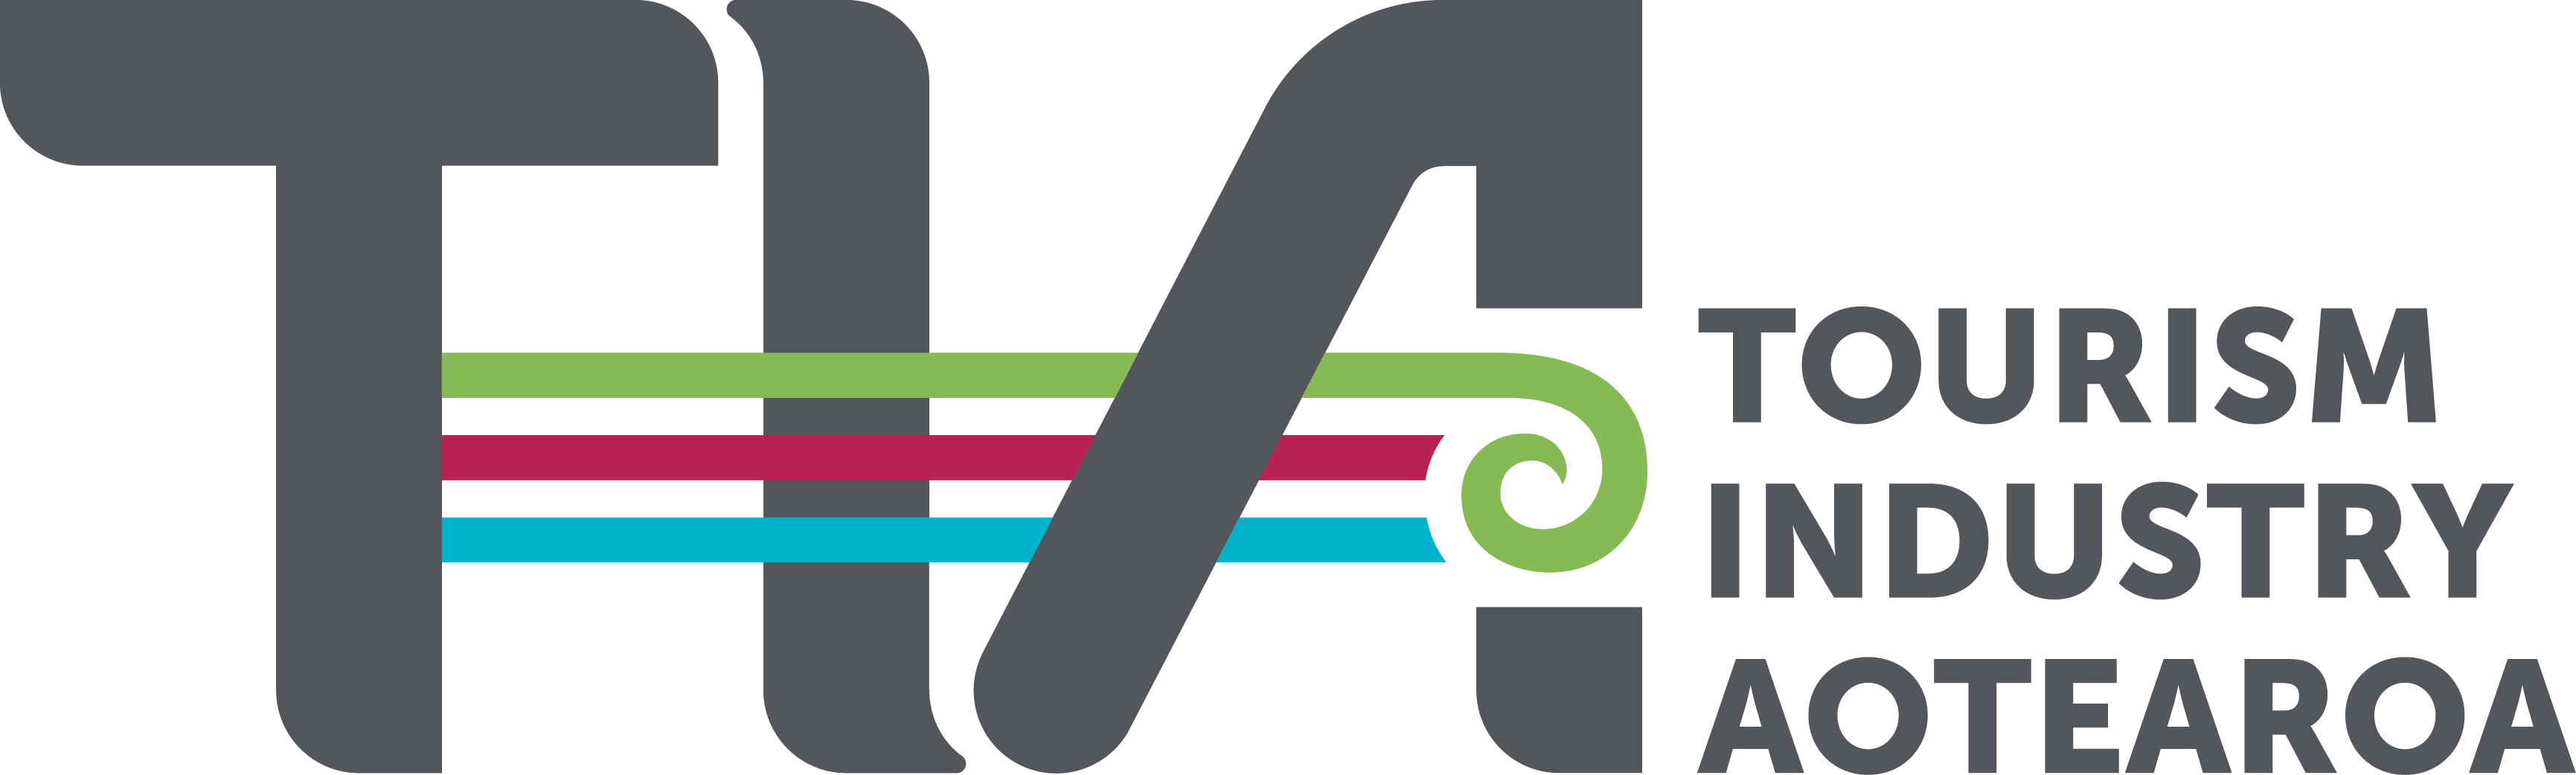 TIA-Logo-Colour-Full.png